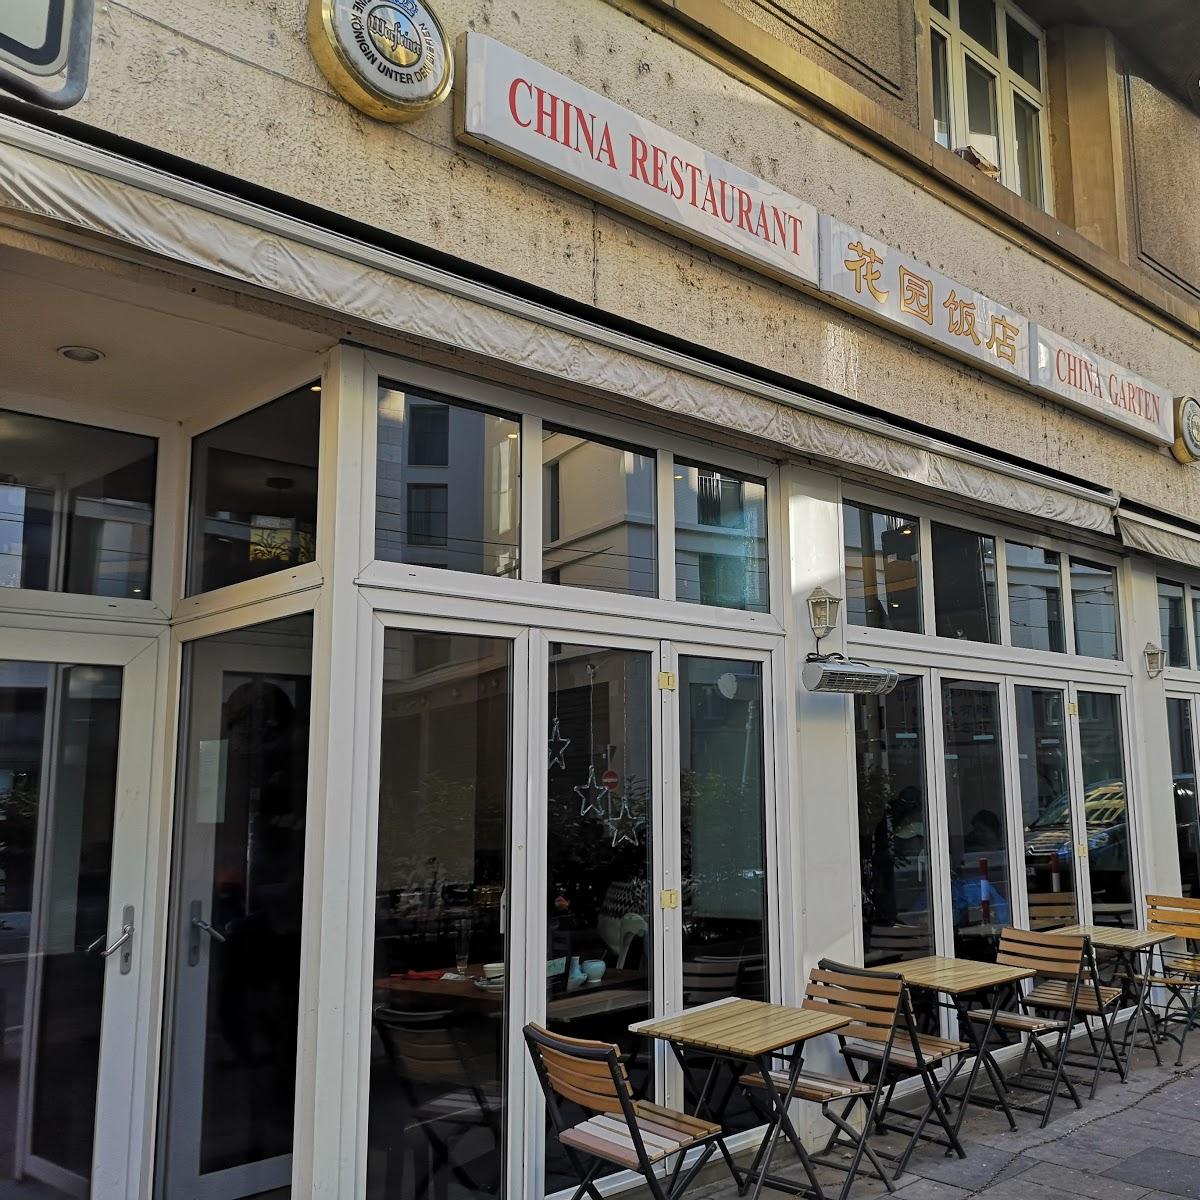 Restaurant "China Garten" in Frankfurt am Main